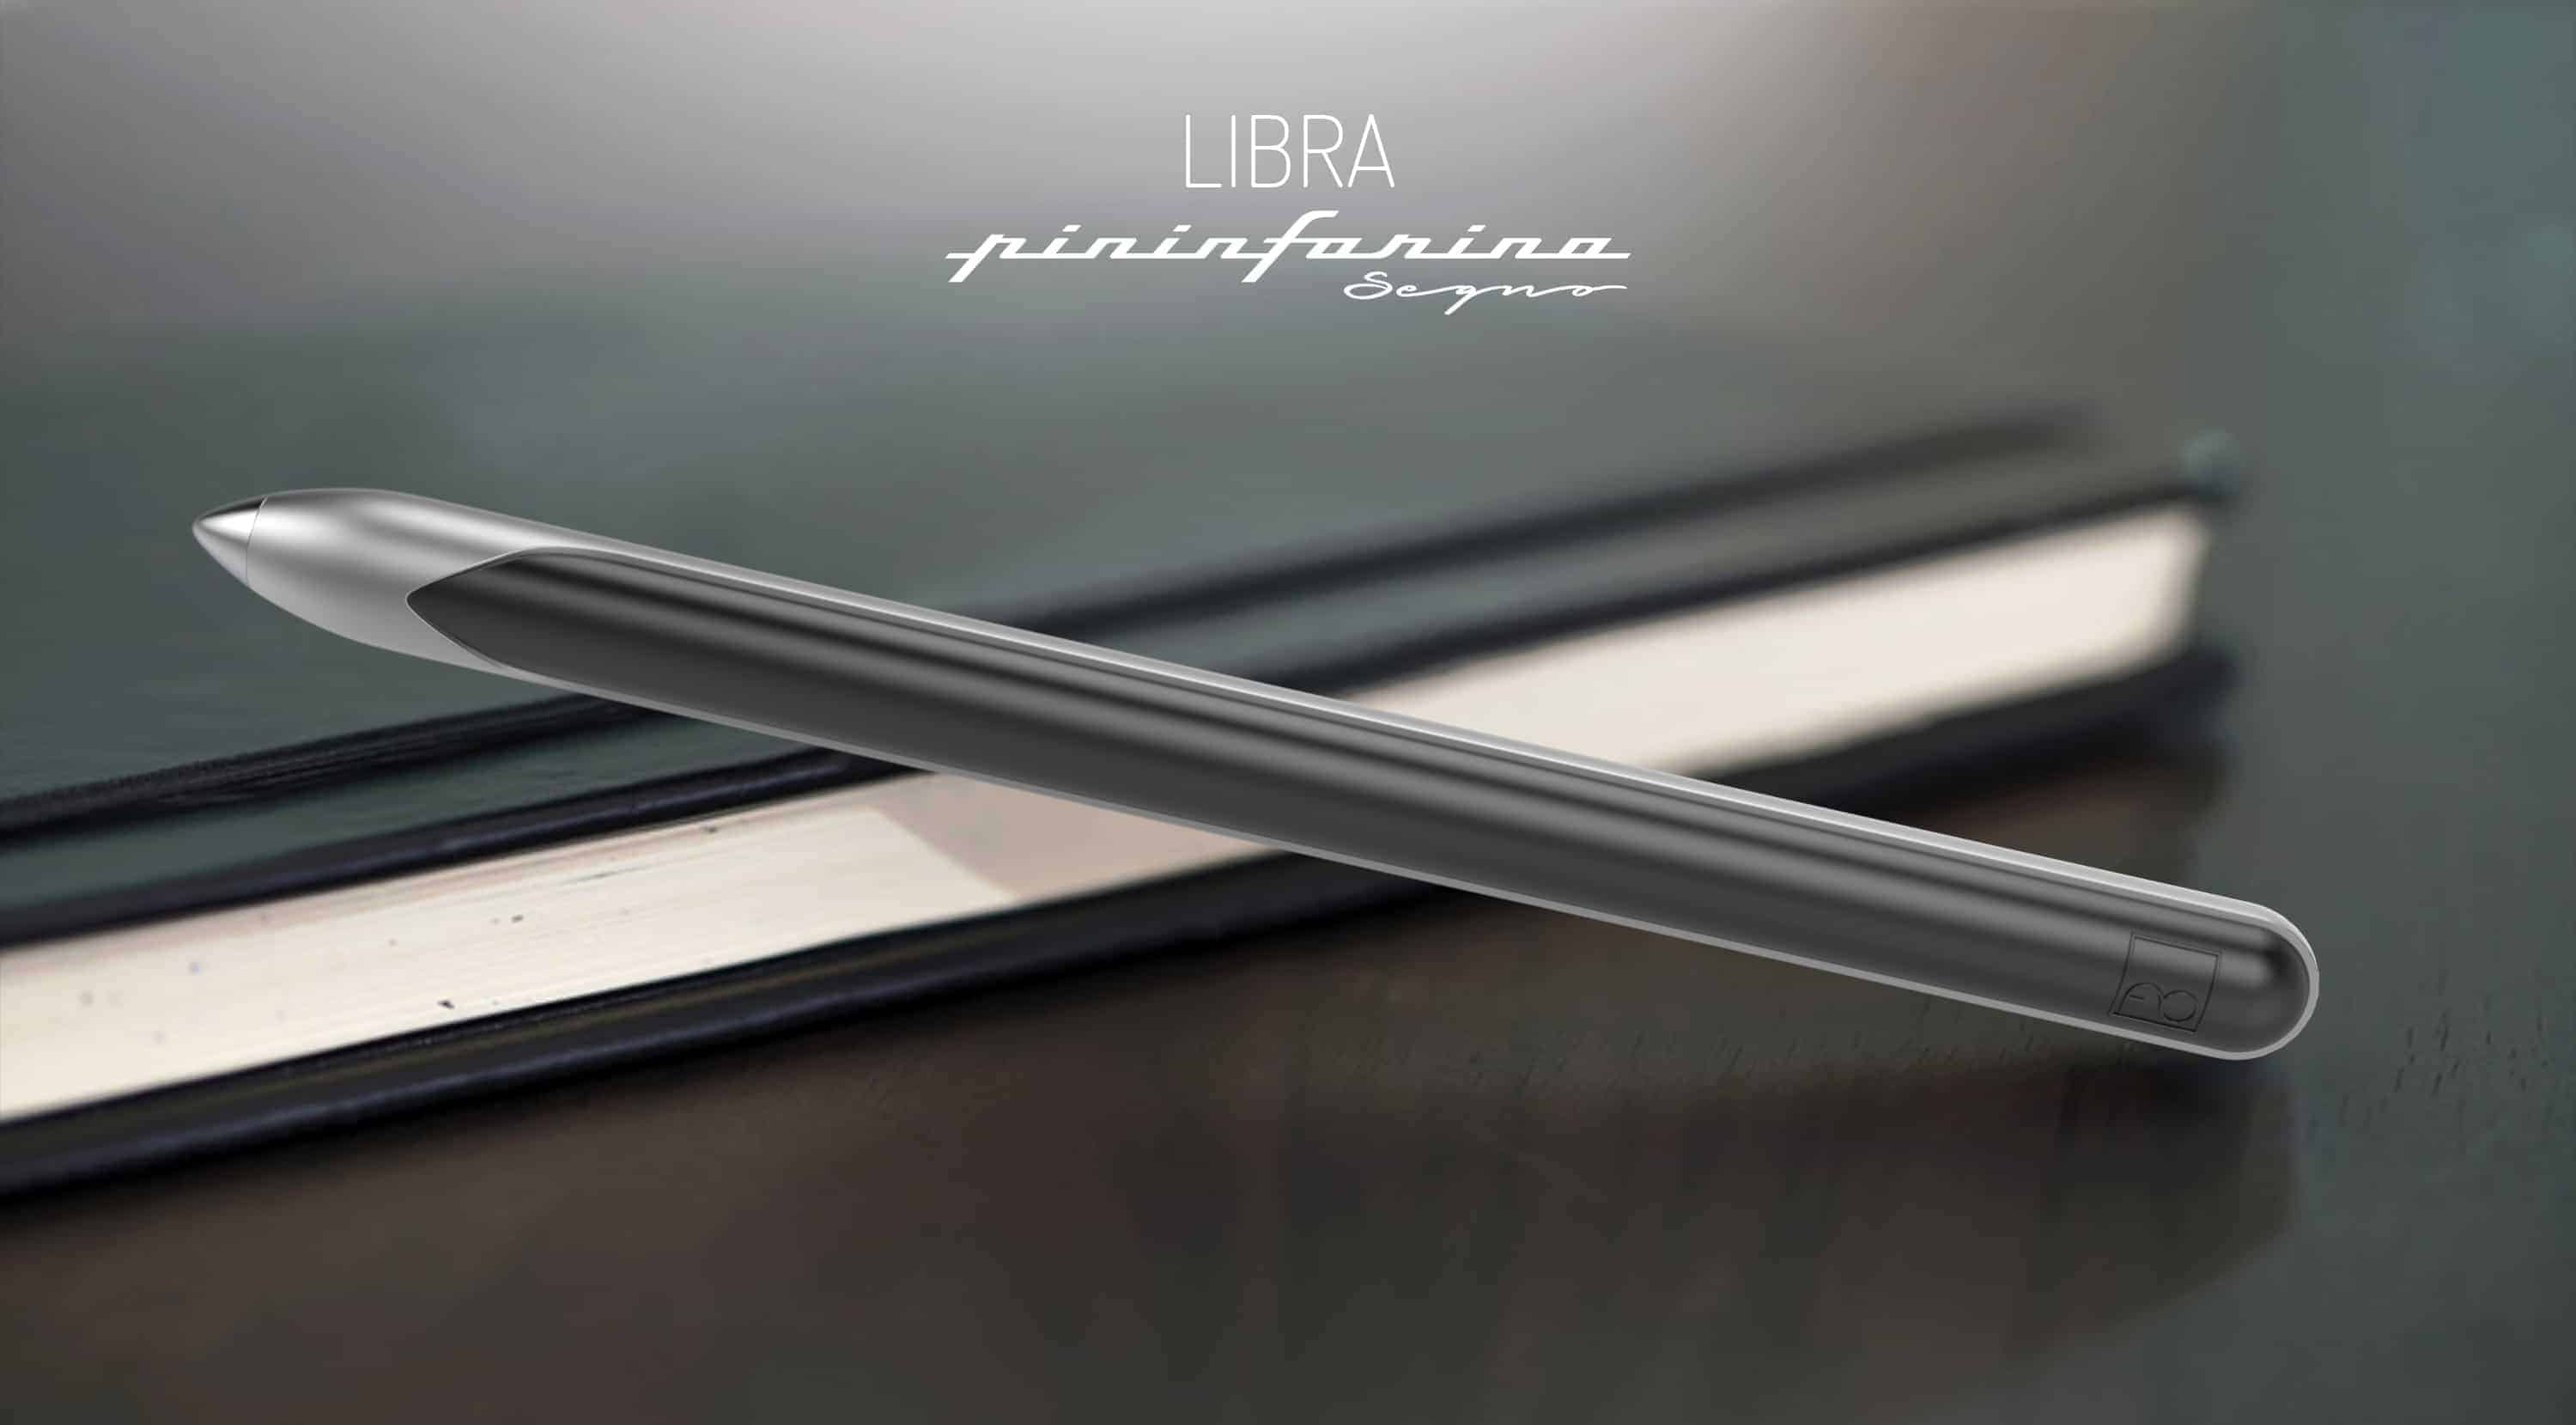 PININFARINA SEGNO - LIBRA inkless pen